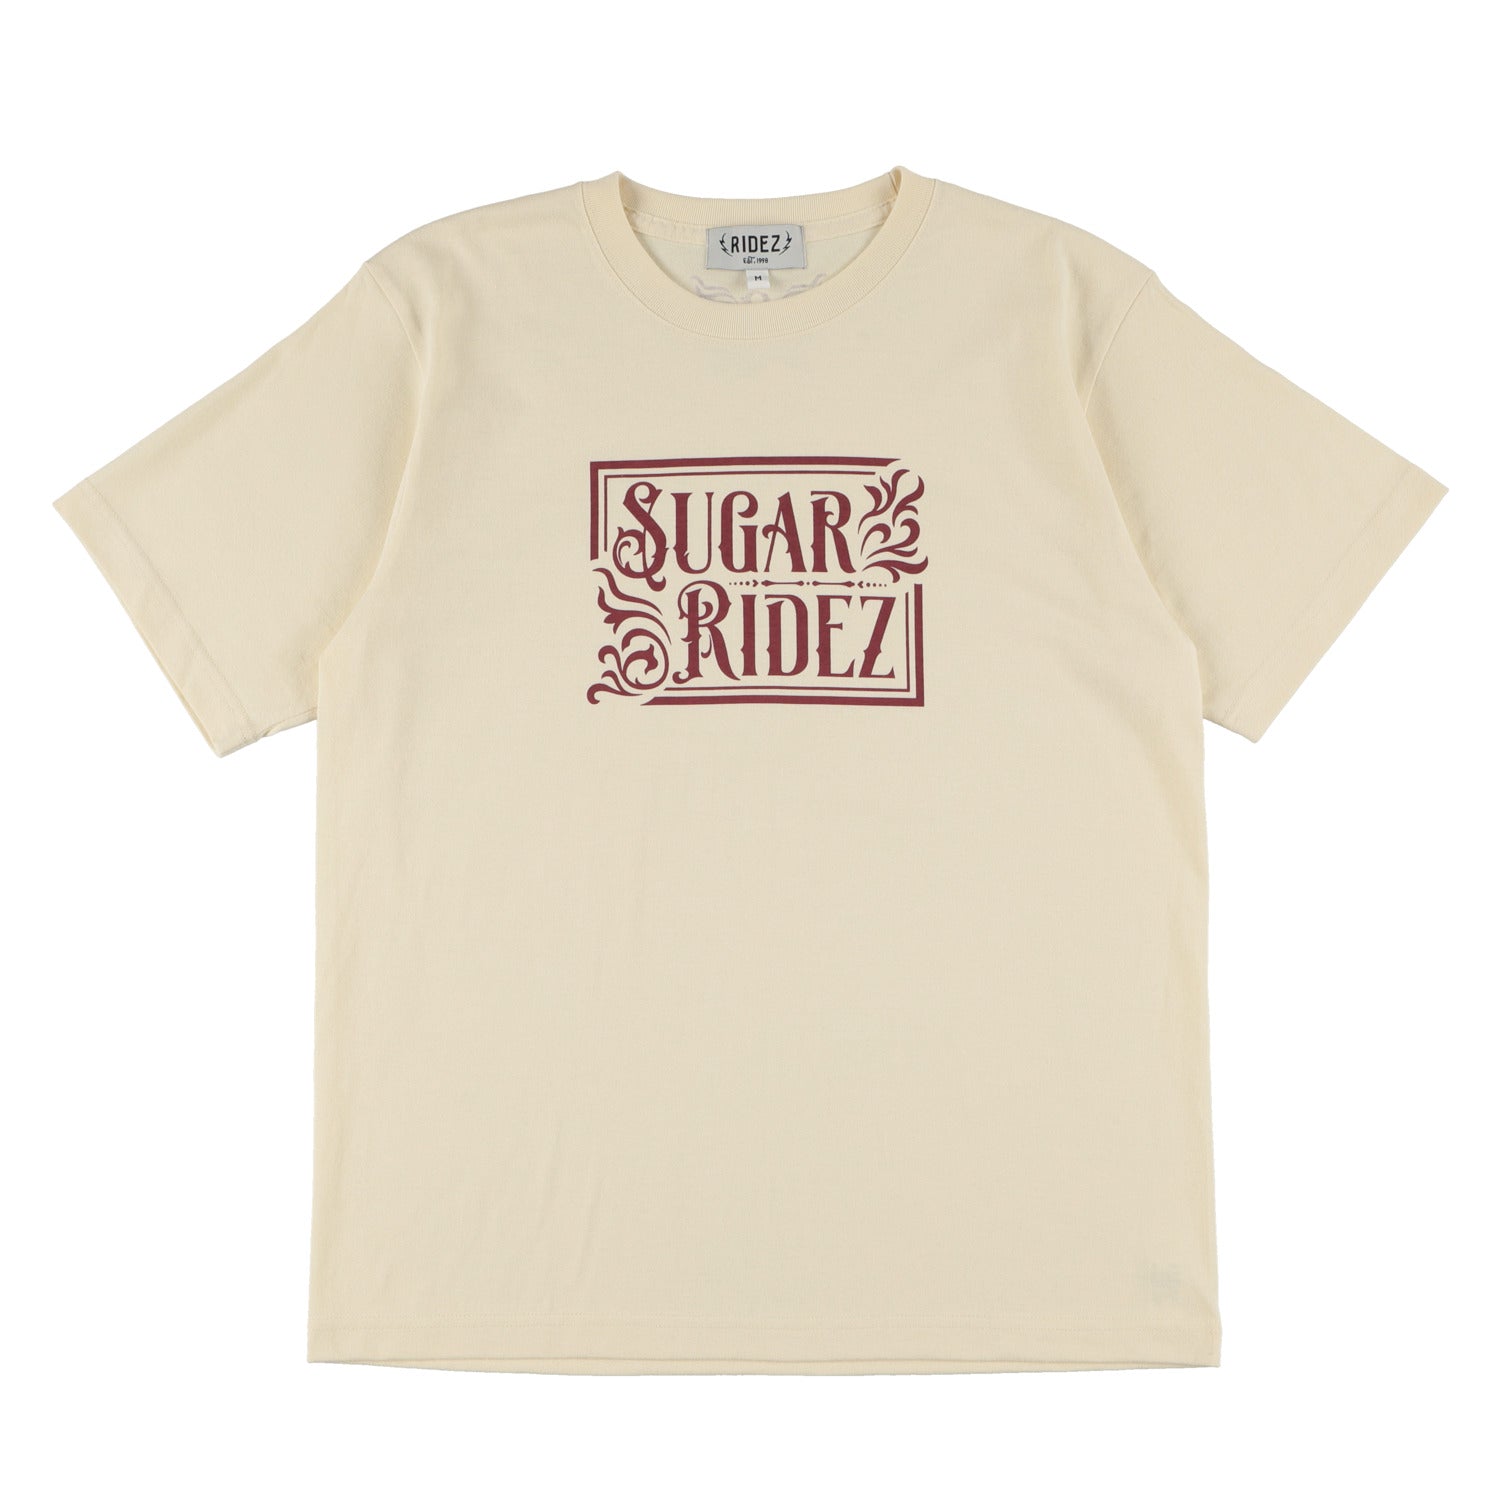 SUGAR RIDEZ 6.2oz 女式 T 恤 RD7014 